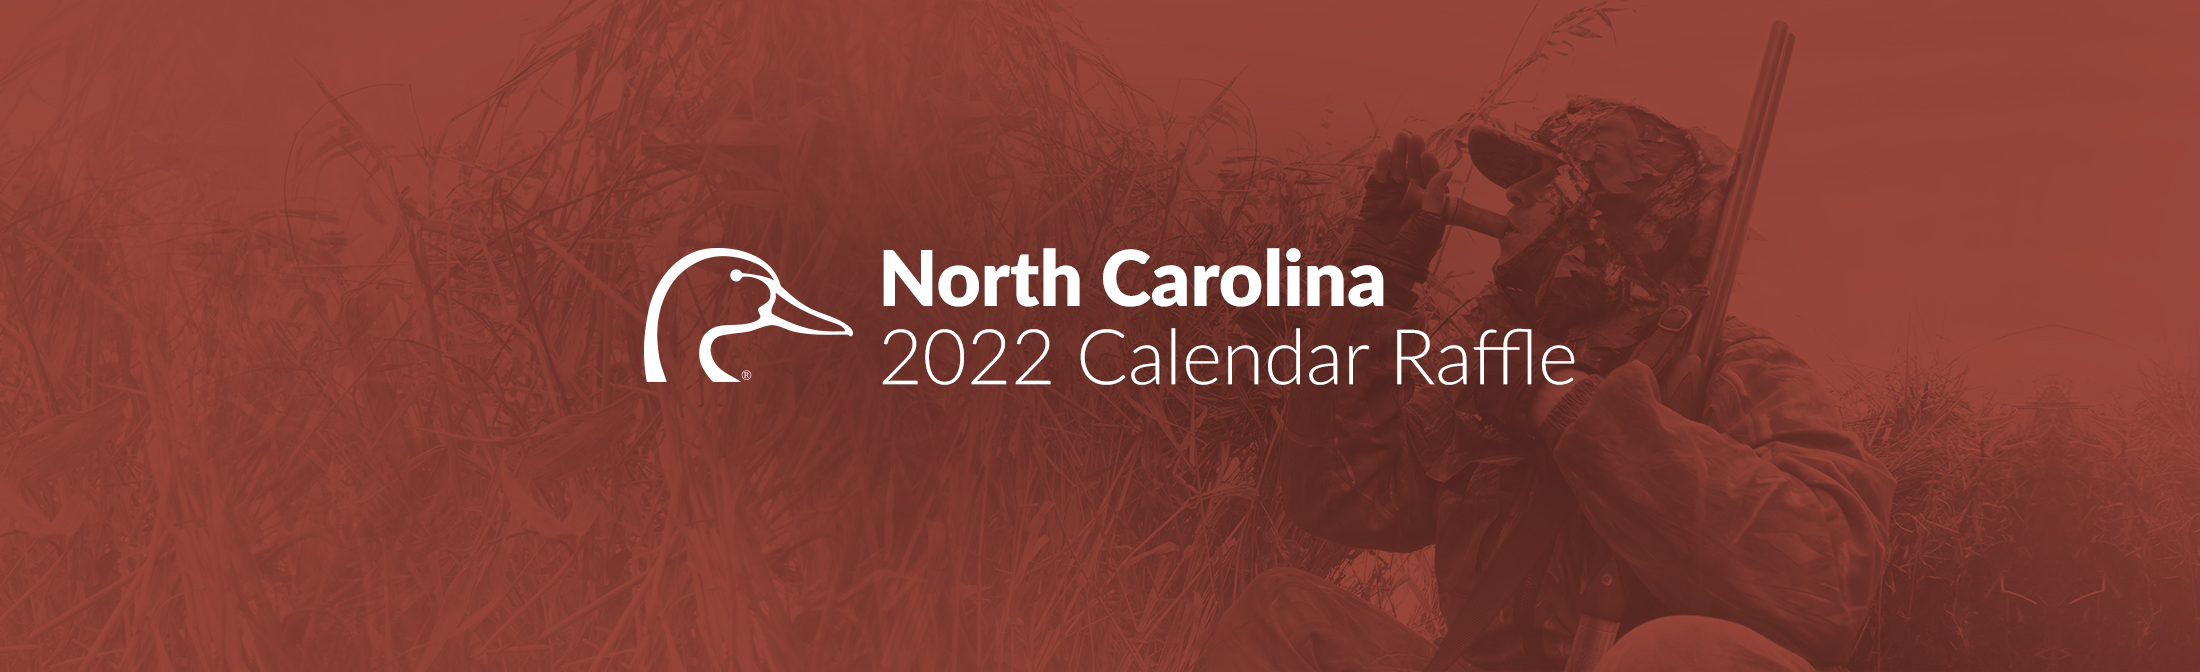 02/14/2022 NCDU Calendar Winner NC Ducks Unlimited